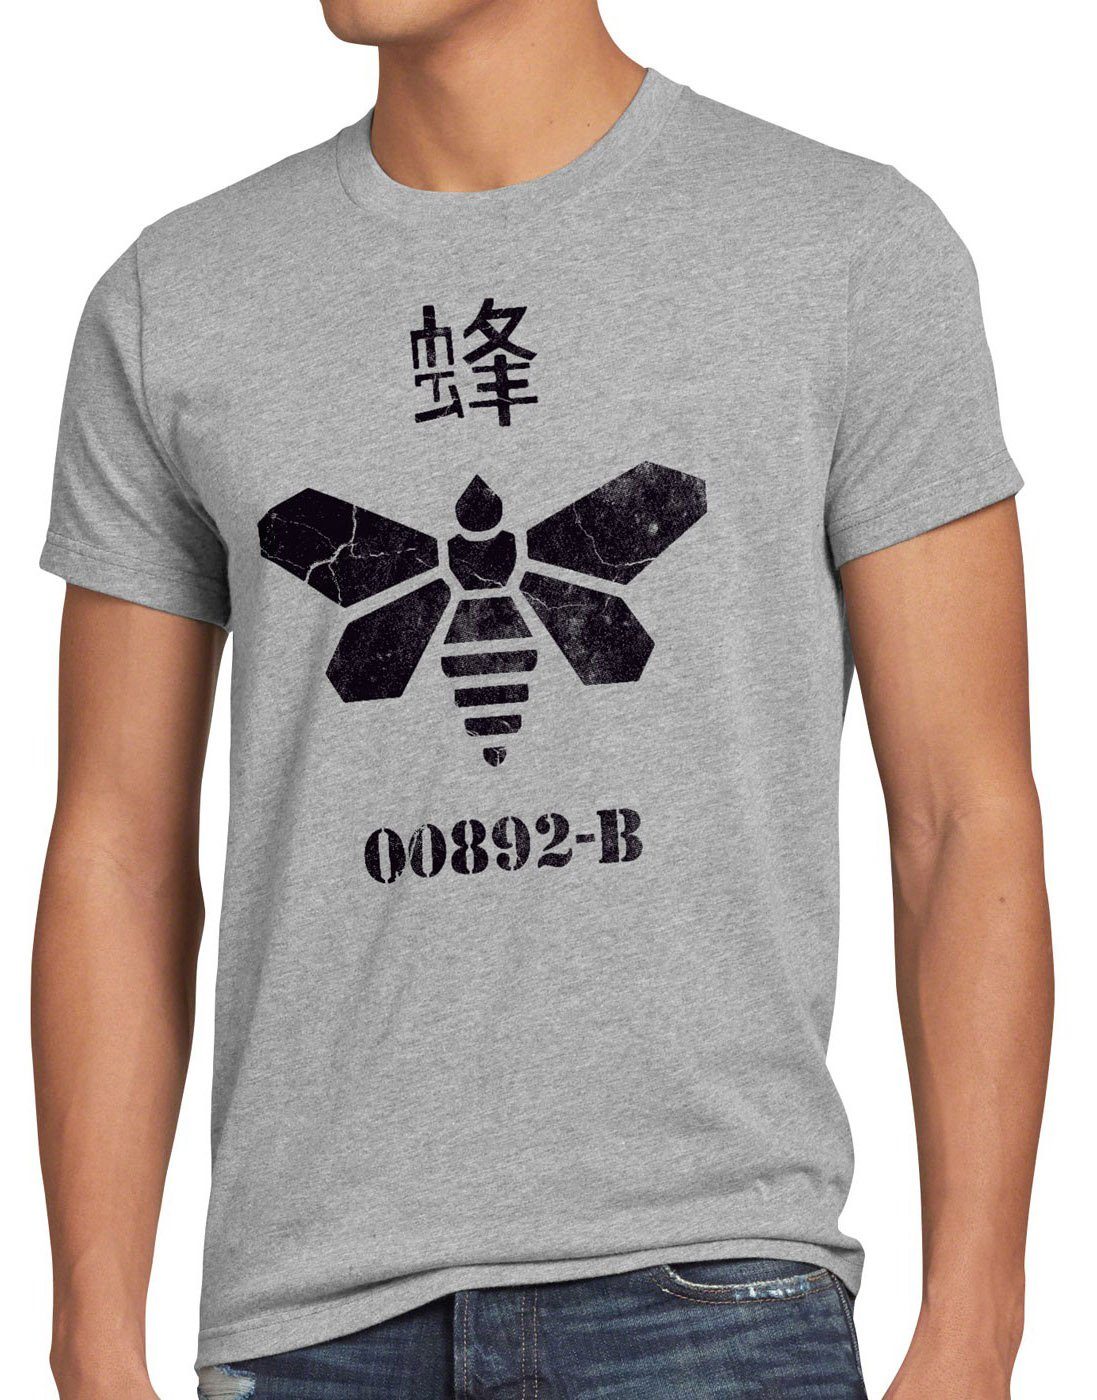 bad Moth Golden T-Shirt grau heisenberg style3 Print-Shirt Chemical chemie biene walter breaking Herren meliert